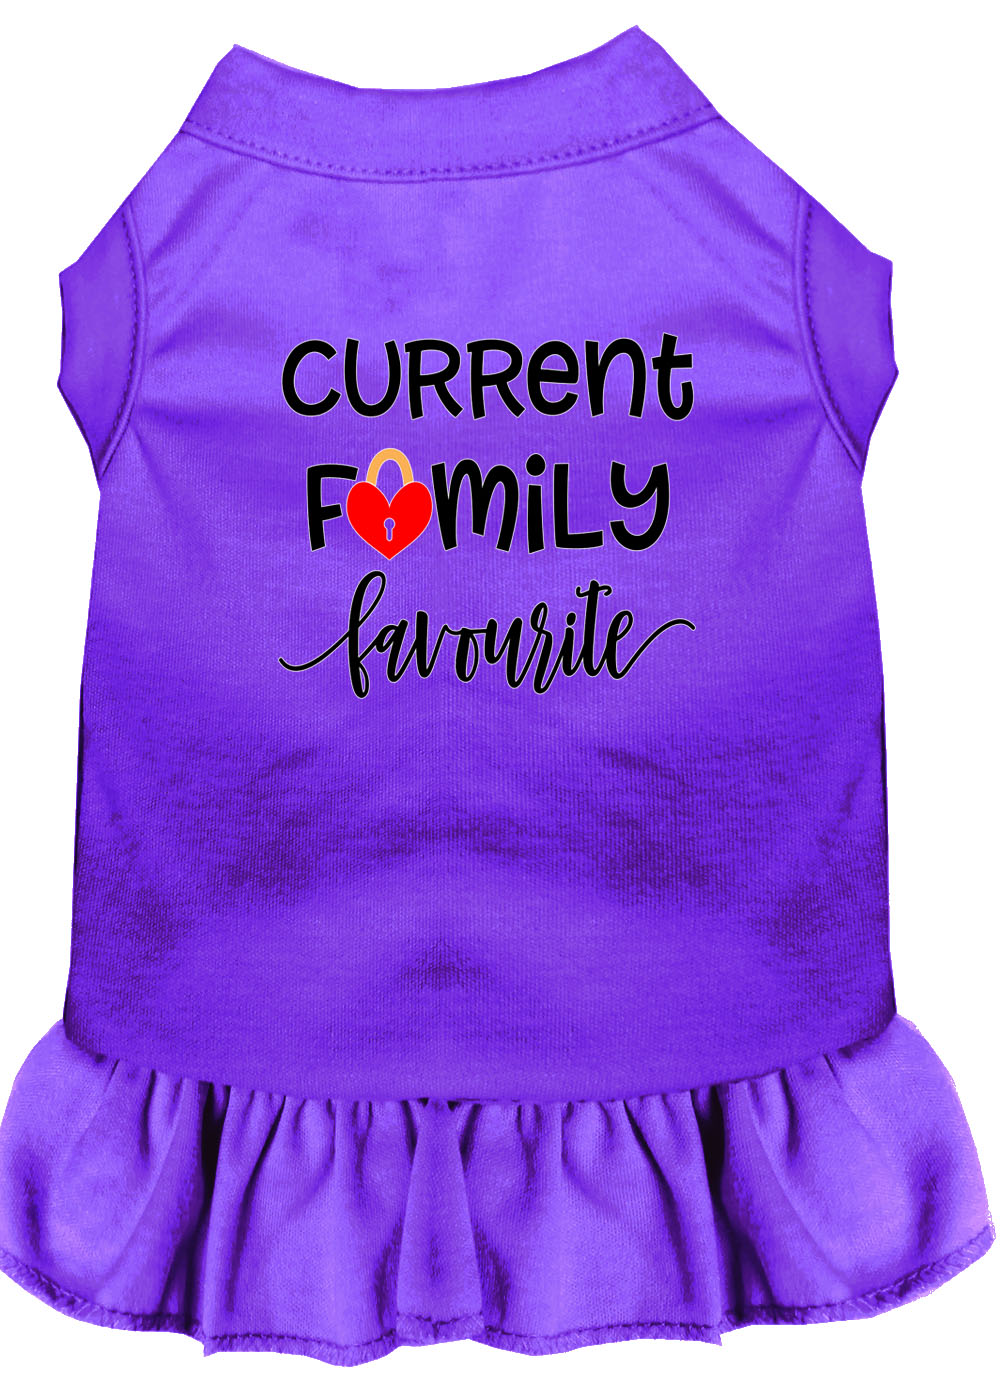 Family Favorite Screen Print Dog Dress Purple Med